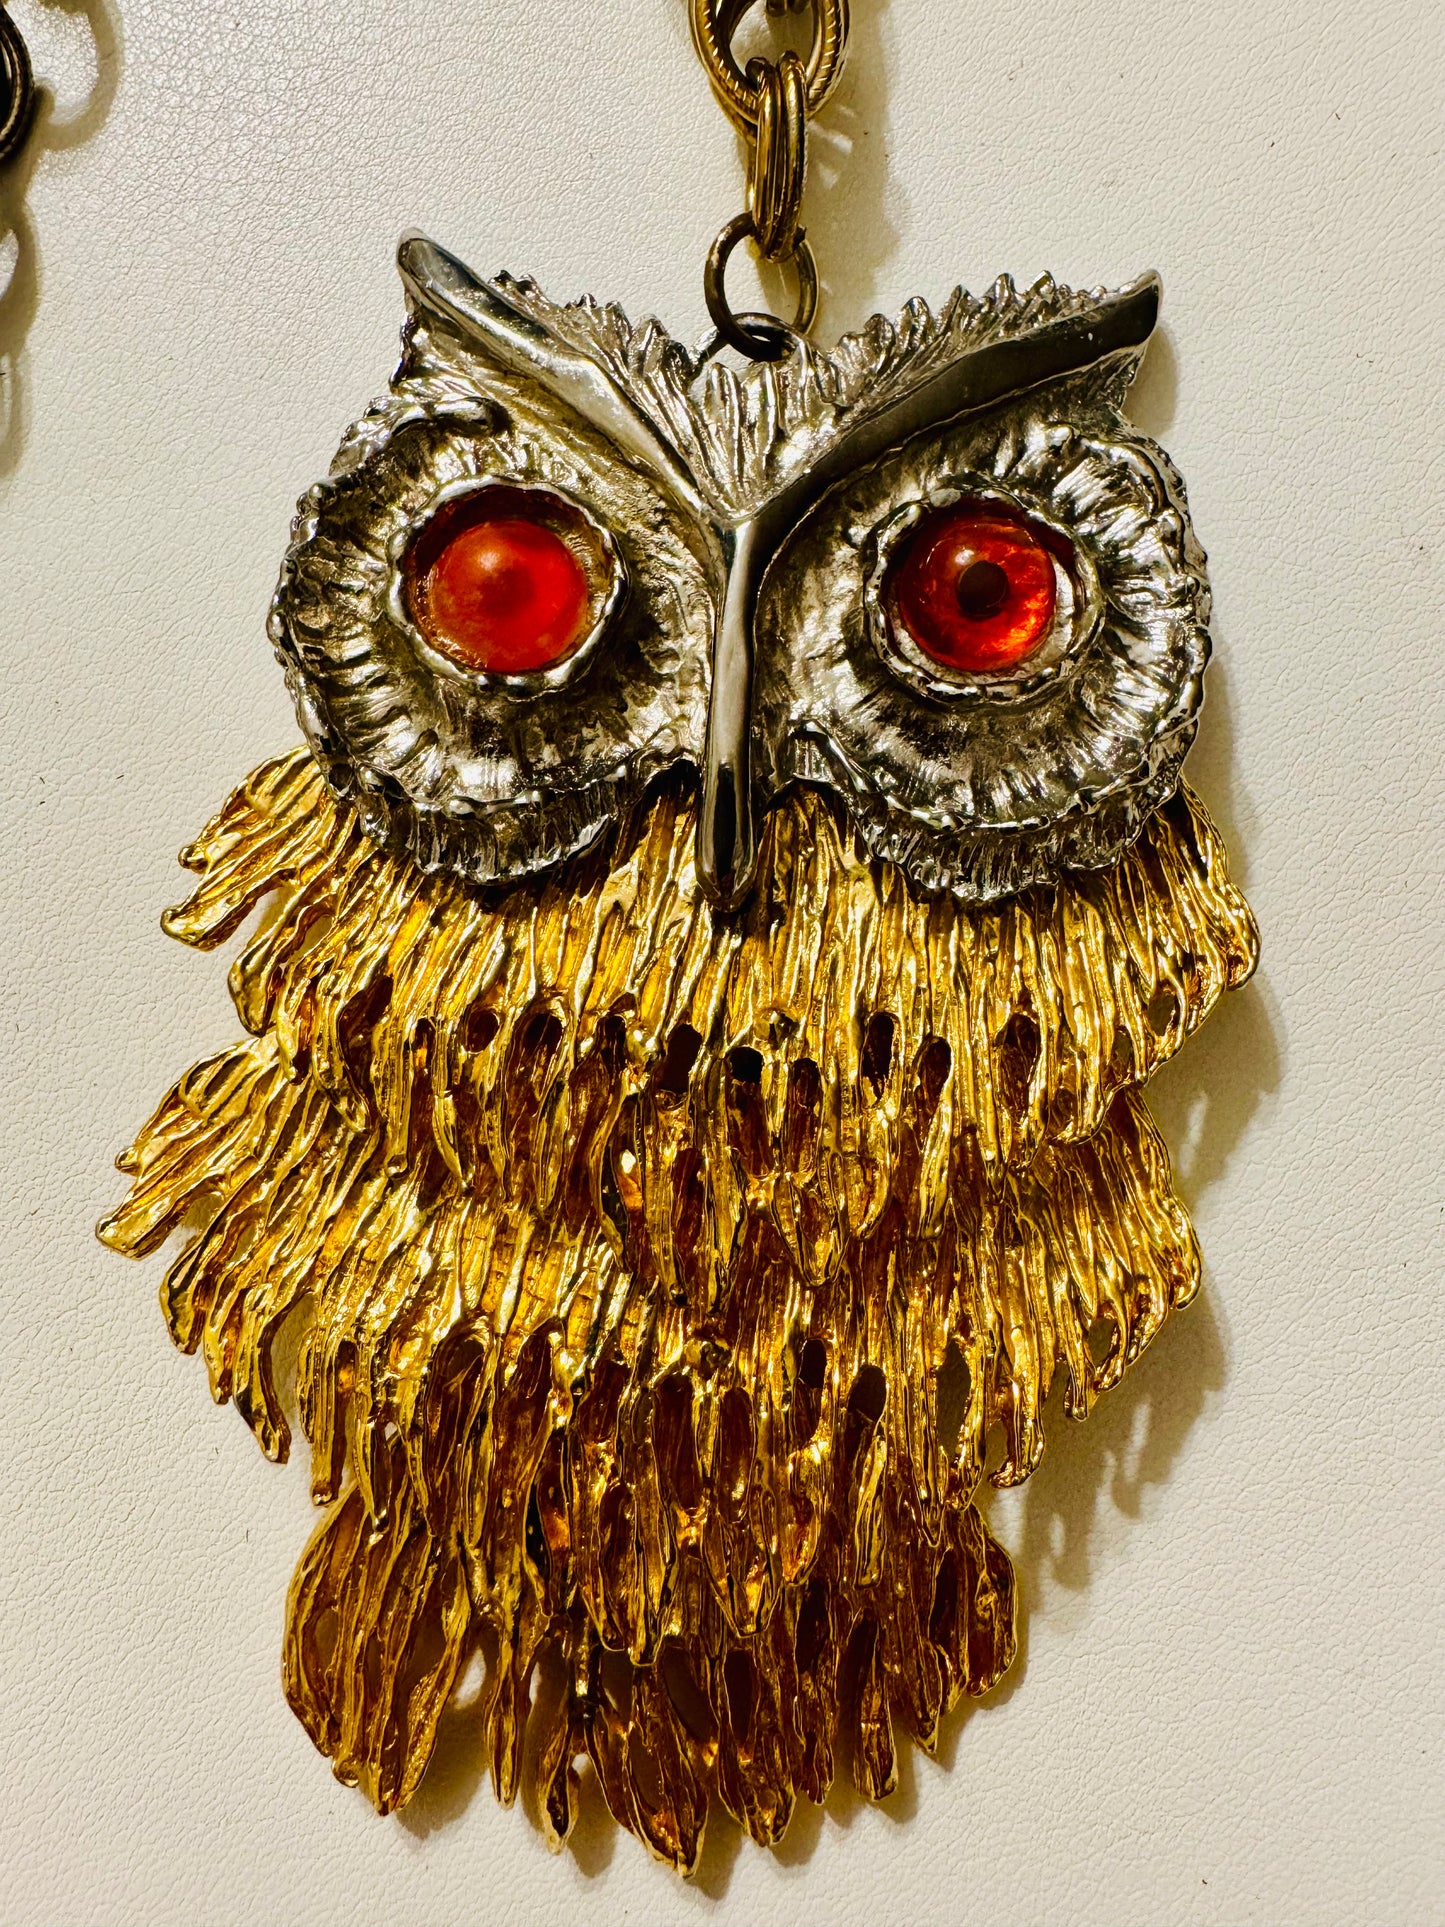 Charming vintage owl necklace